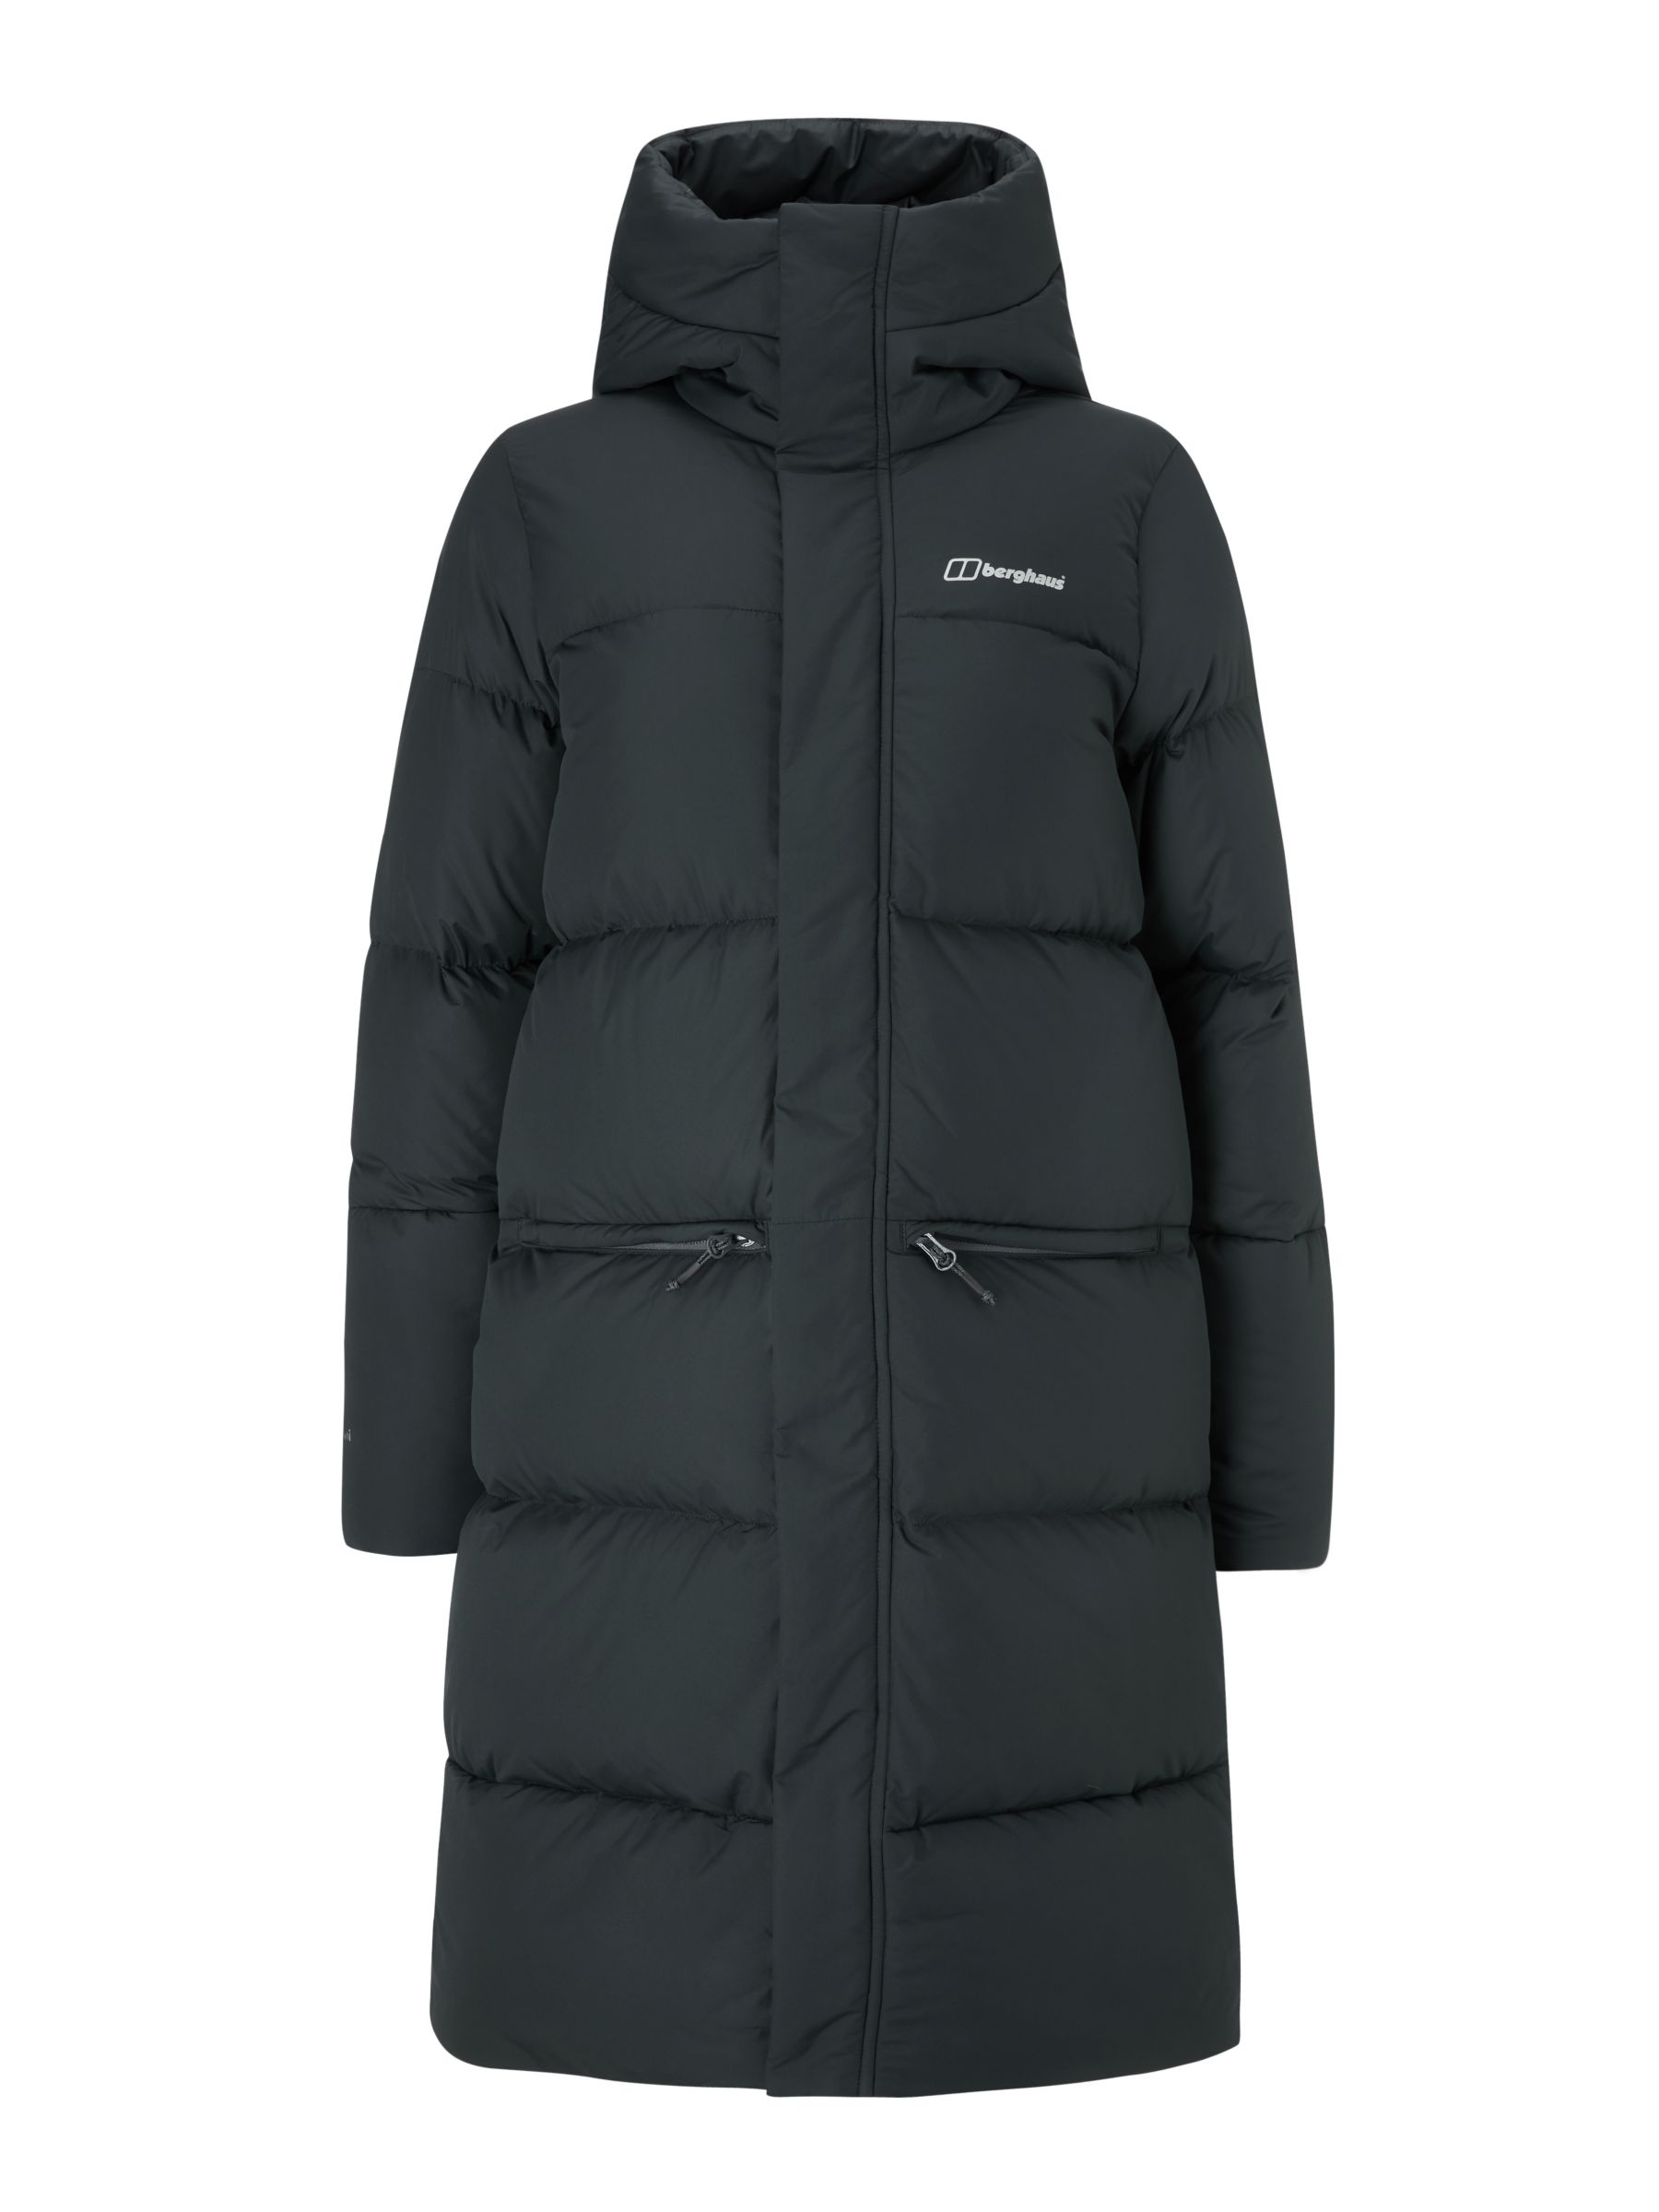 Berghaus Combust Reflect Women's Long Insulated Jacket, Jet Black